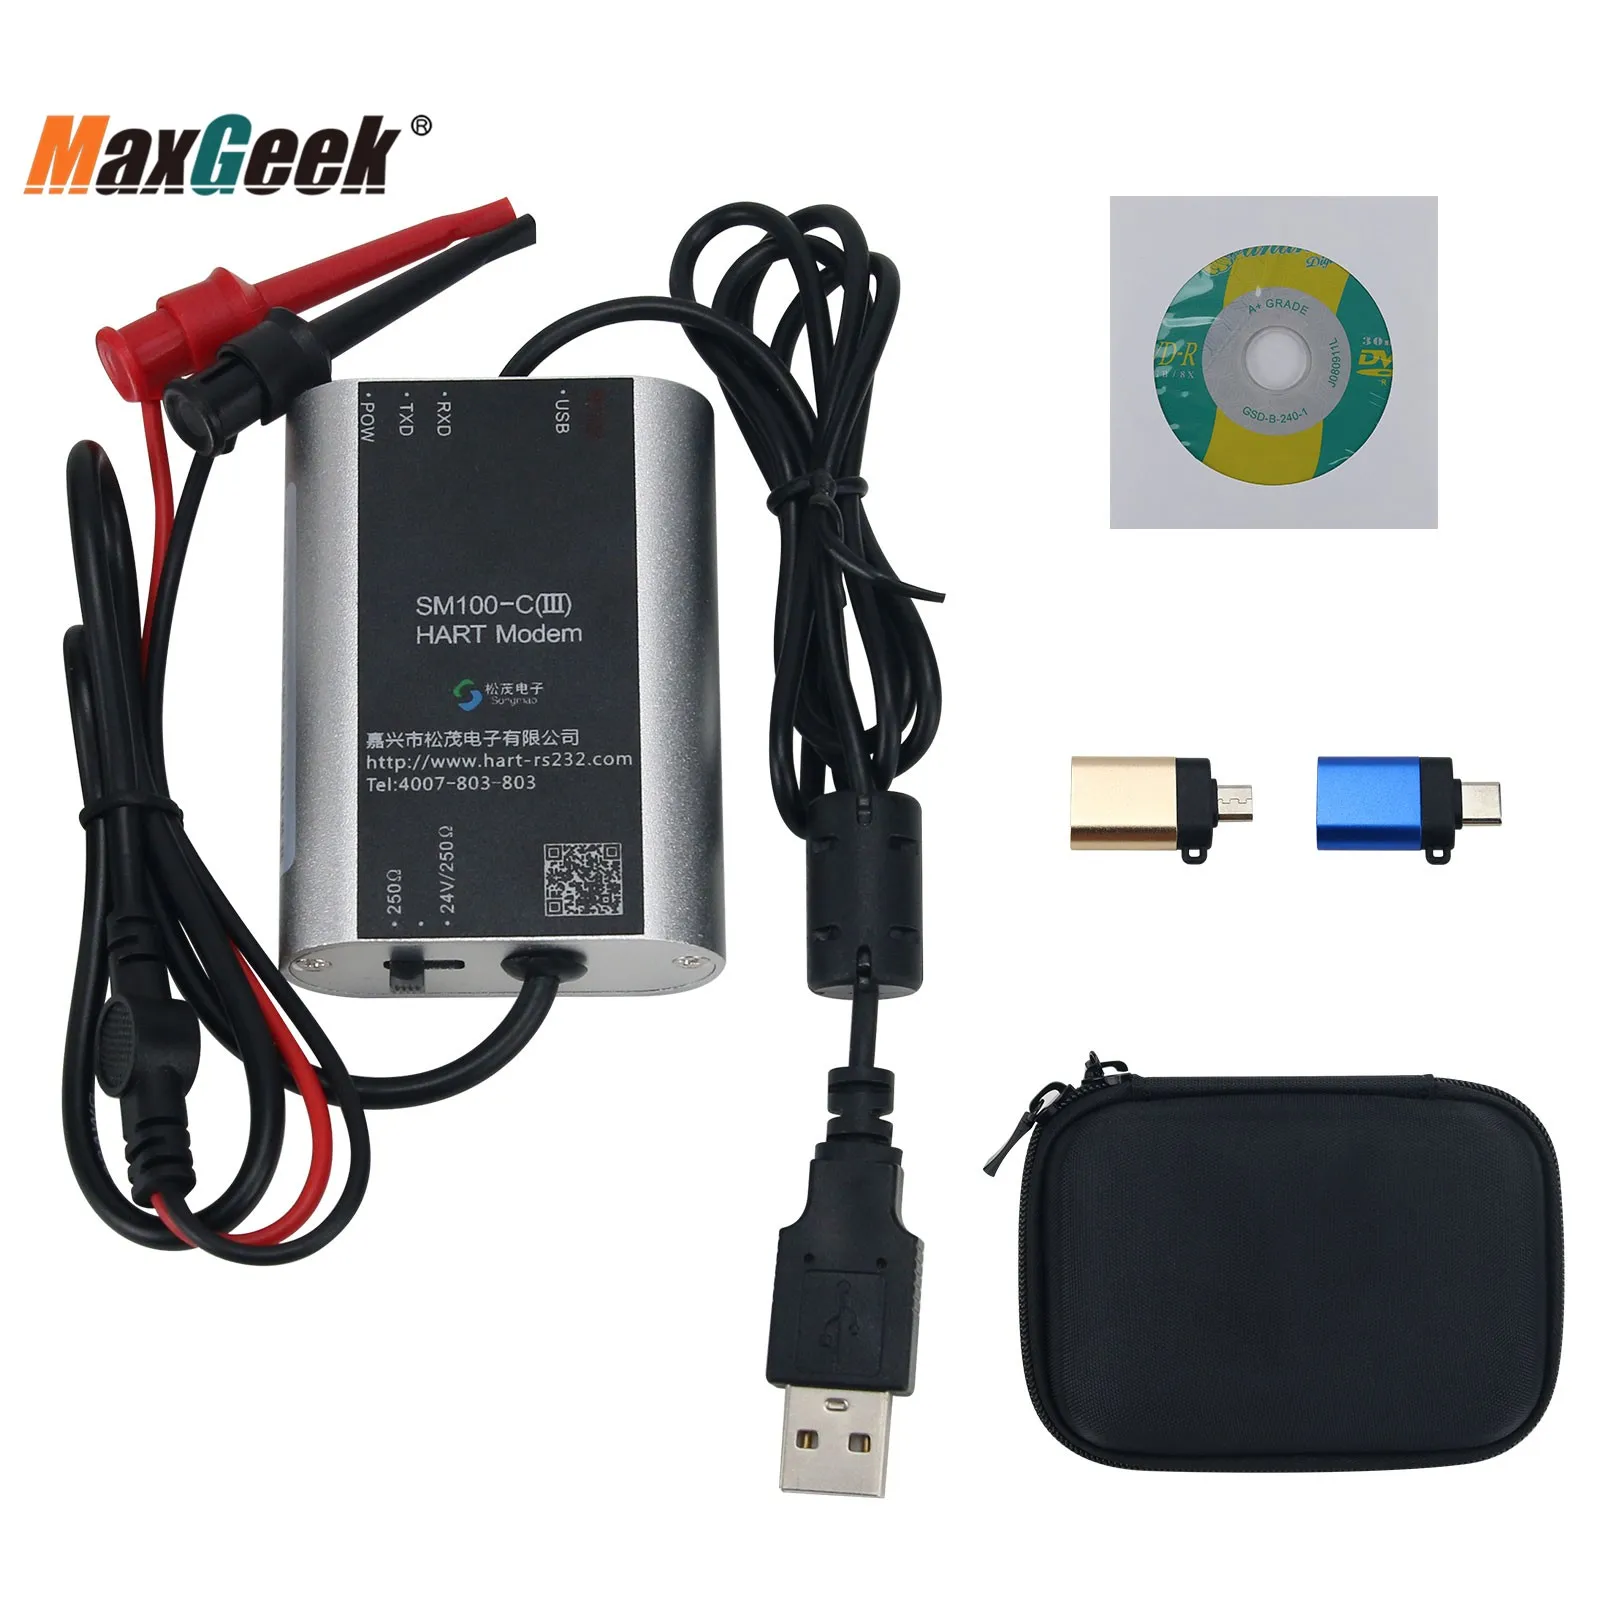 

Maxgeek SM100-C (III) Standard Version Hart Modem USB to Hart Modem HART Cat Supports Mobile APP Debugging